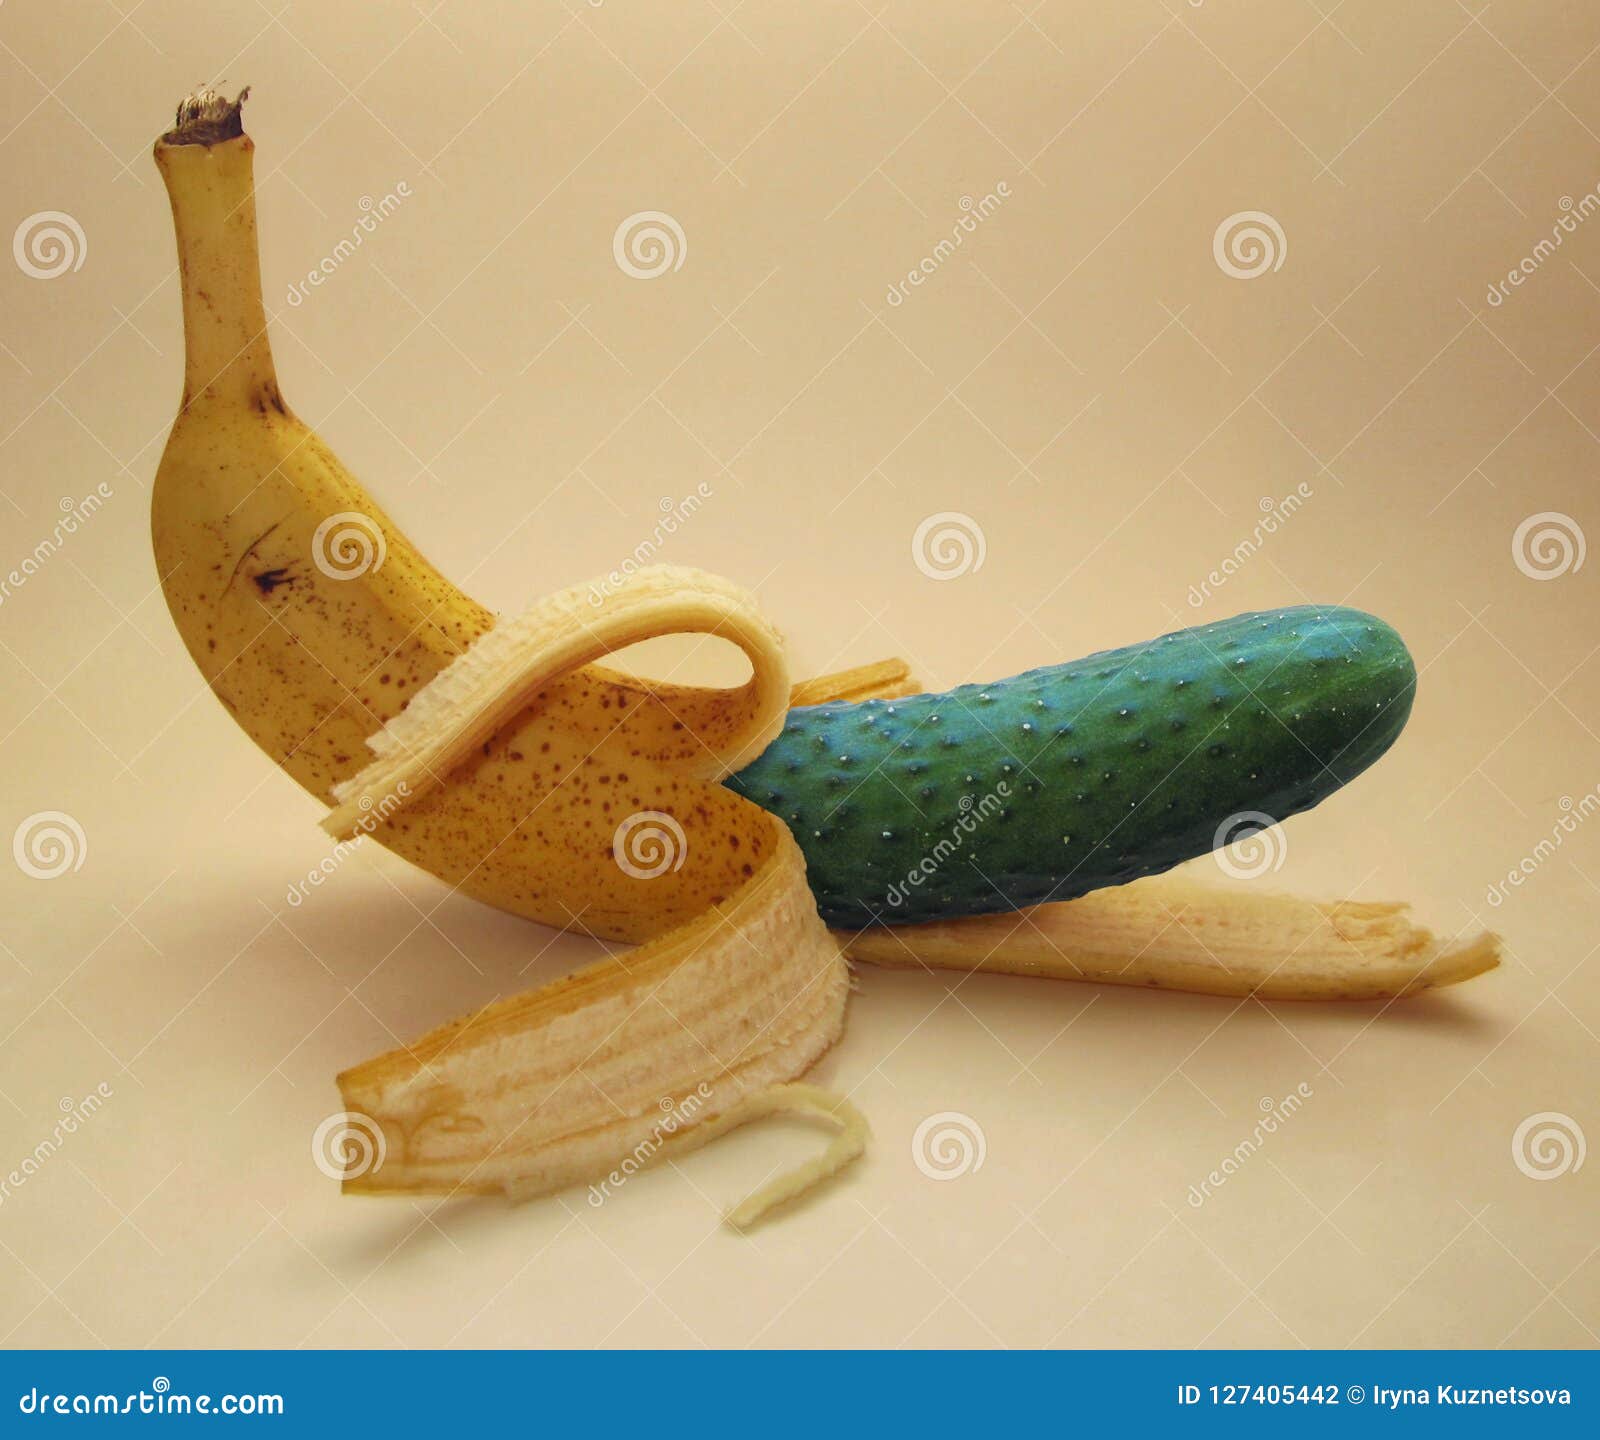 Banana and cucumber. stock photo. Image of banana, healthy - 127405442